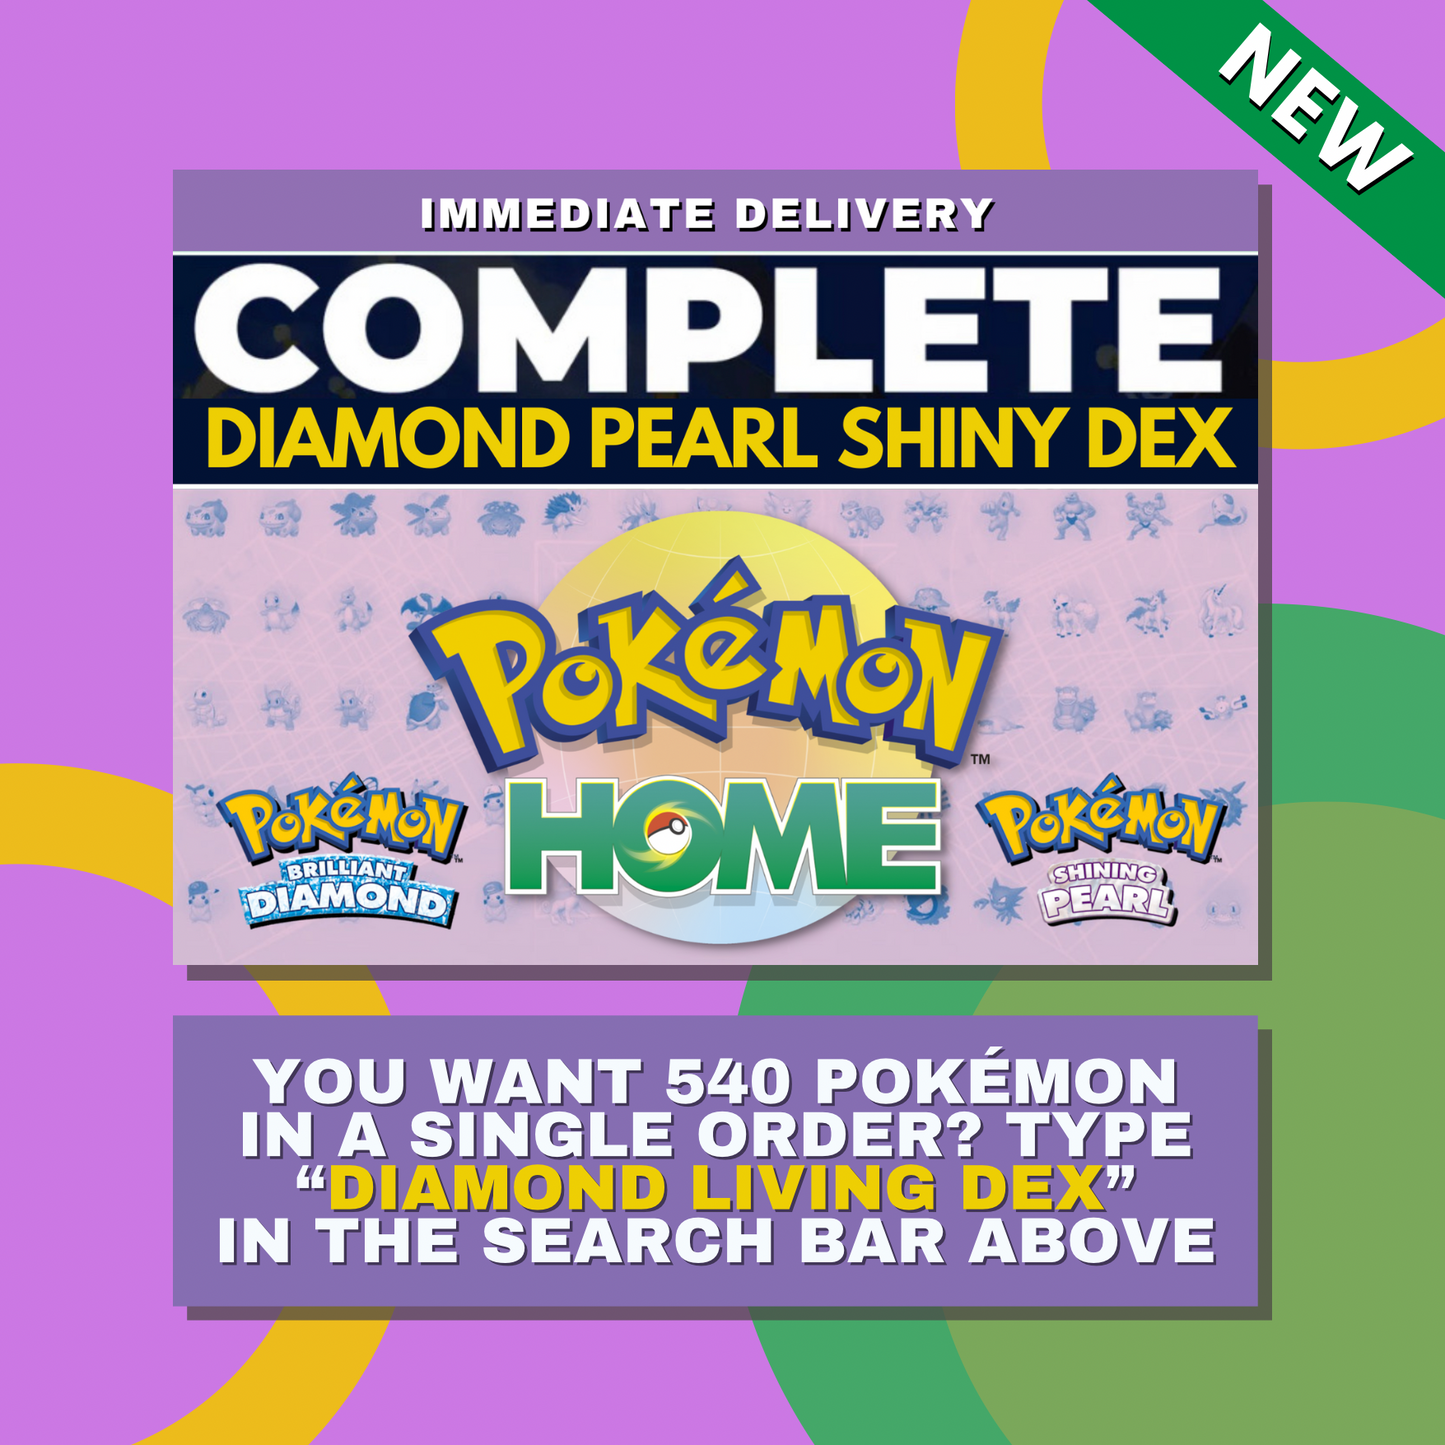 Butterfree Shiny ✨ or Non Shiny Pokémon Brilliant Diamond Shining Pearl Battle Ready 6 IV Competitive 100% Legit Level 100 Customizable Custom OT by Shiny Living Dex | Shiny Living Dex